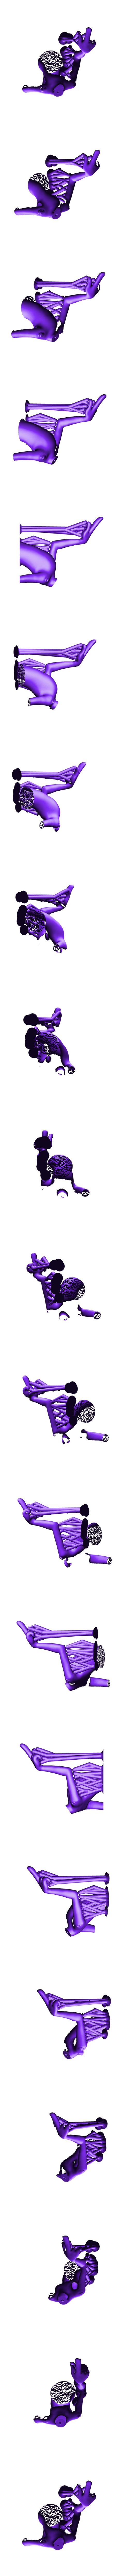 Duck_Body_Mid_Black.stl Download free STL file Daffy Duck • 3D printing model, mag-net